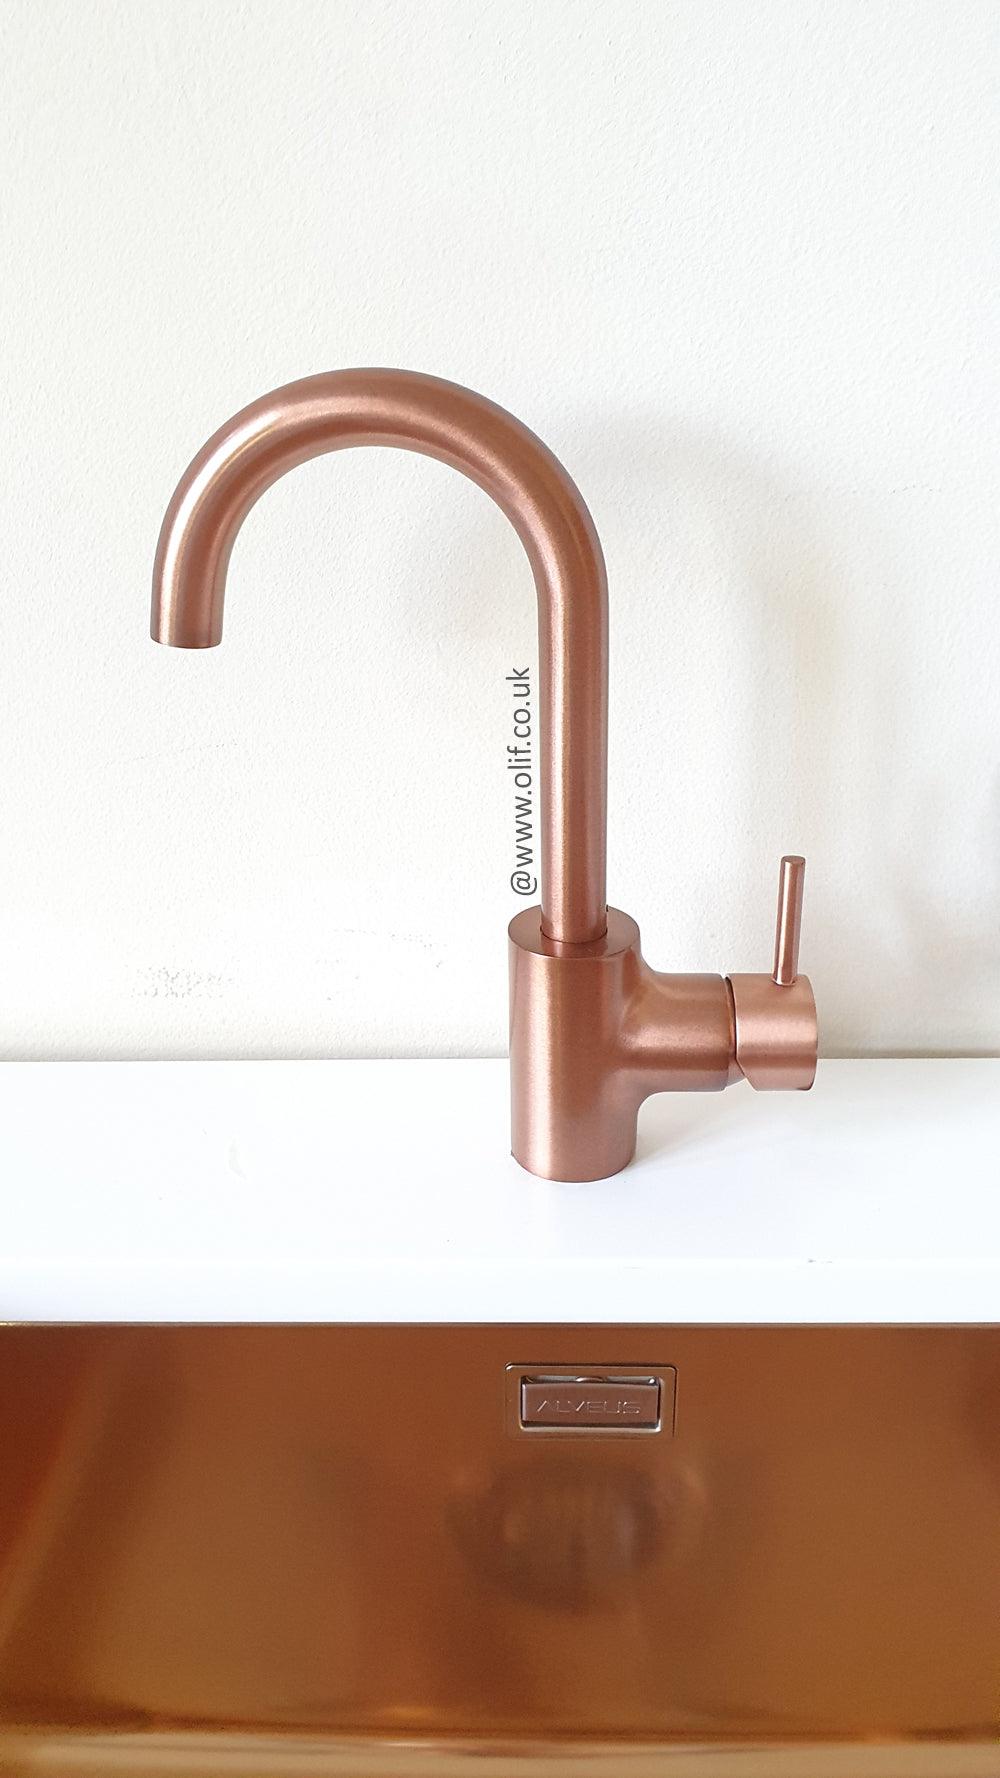 Minimo Rustic Copper, kitchen mixer tap - Olif